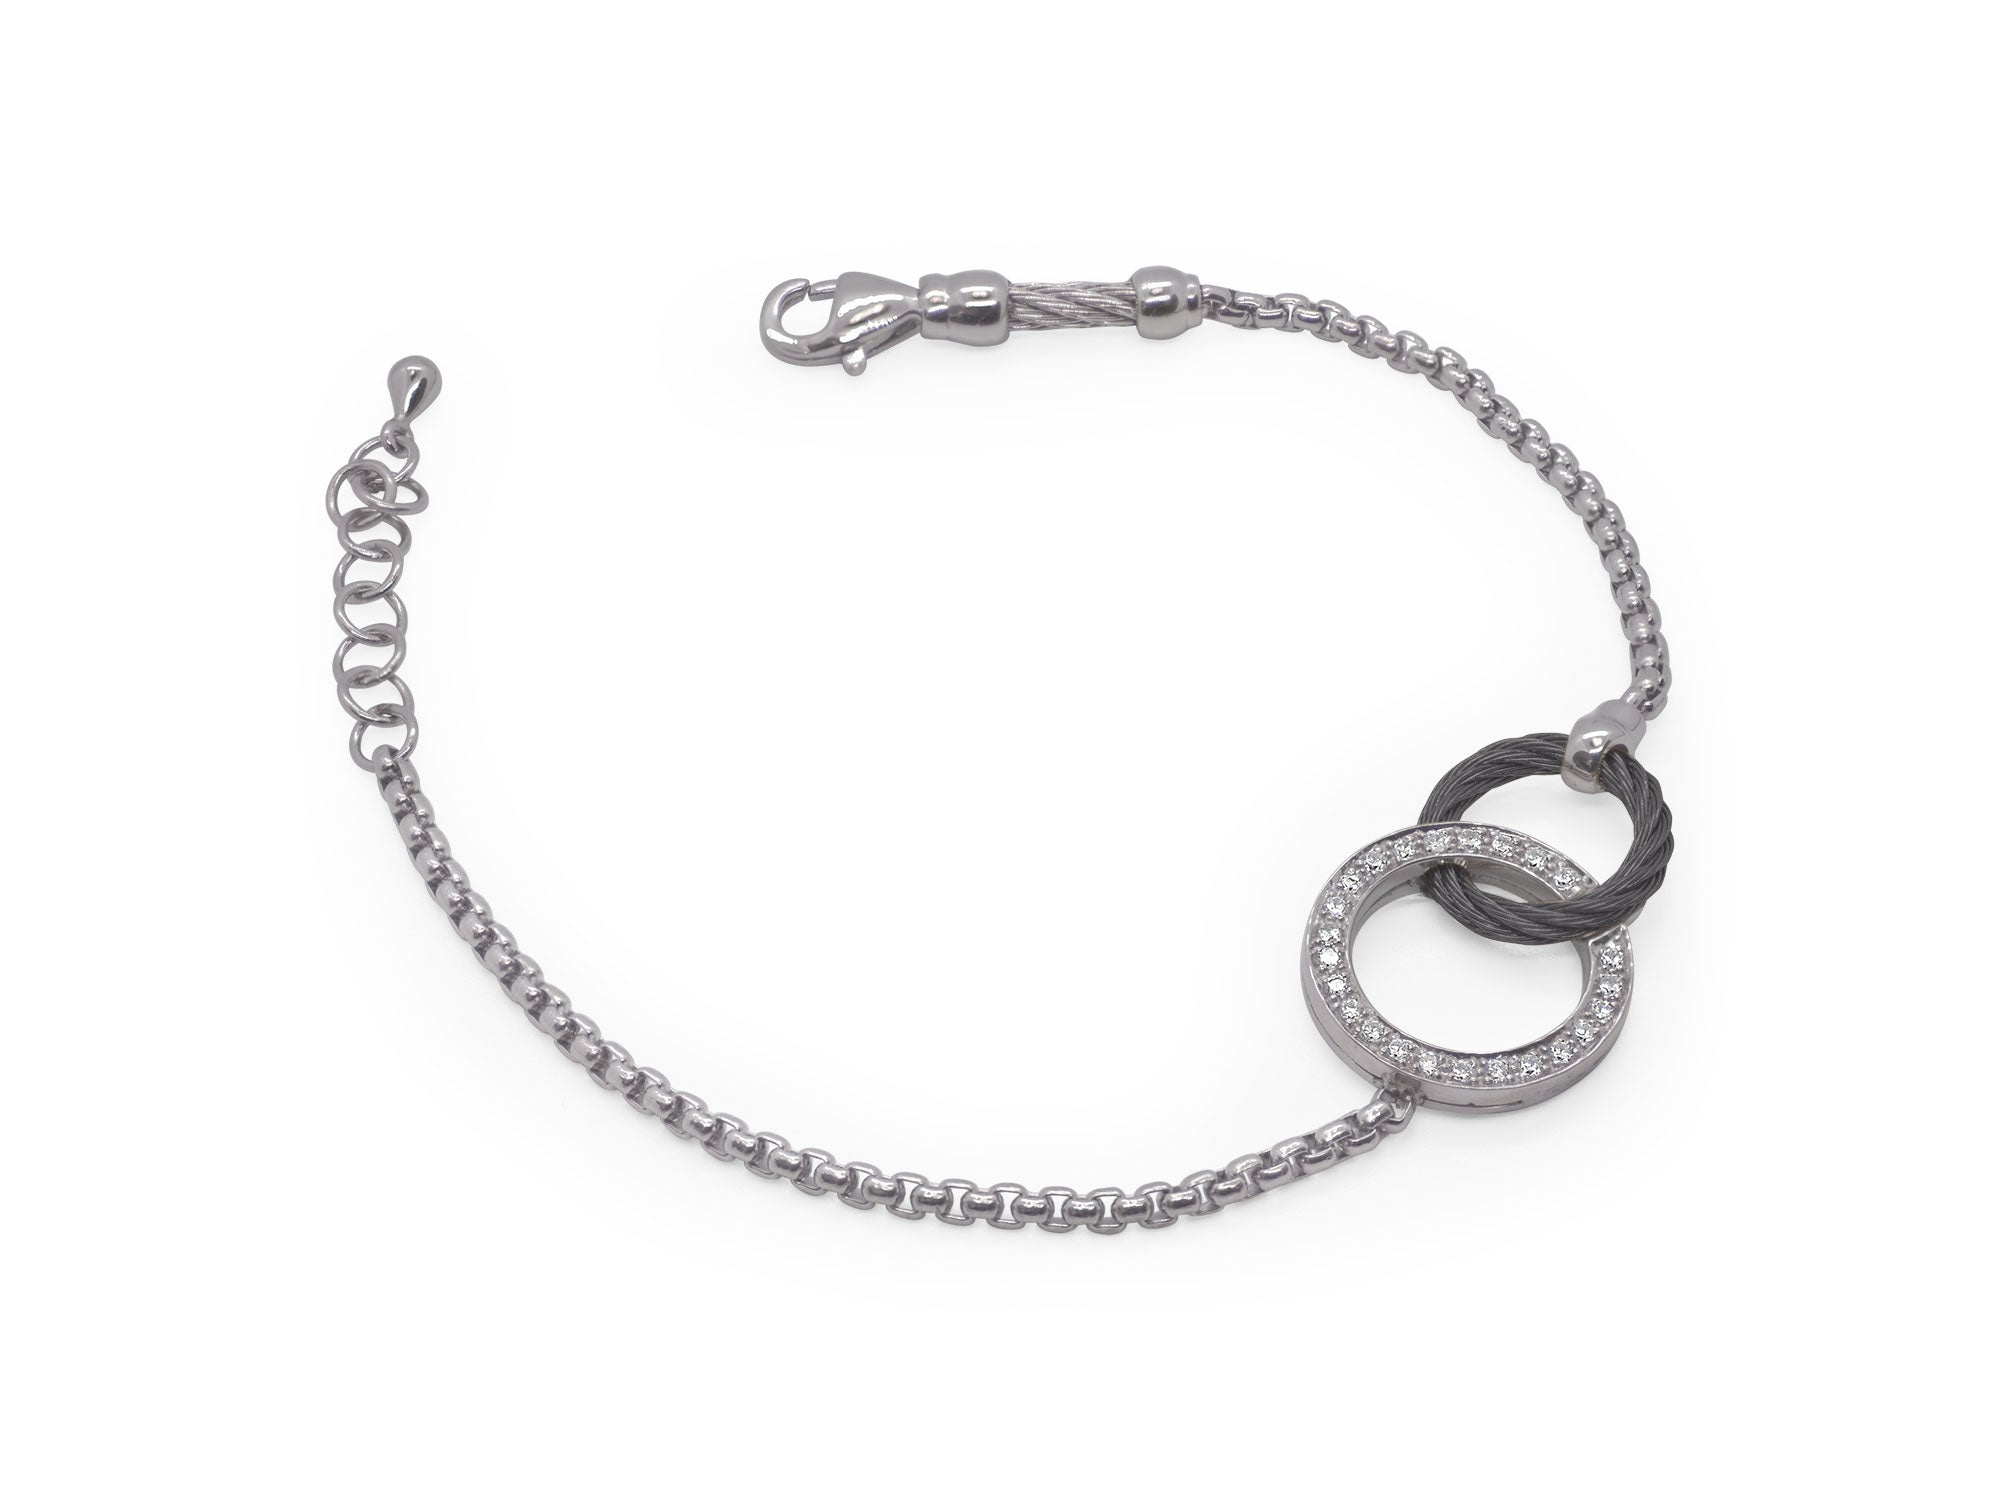 ALOR Grey Chain & Black Cable Interlocking Bracelet with 14kt Gold & Diamonds